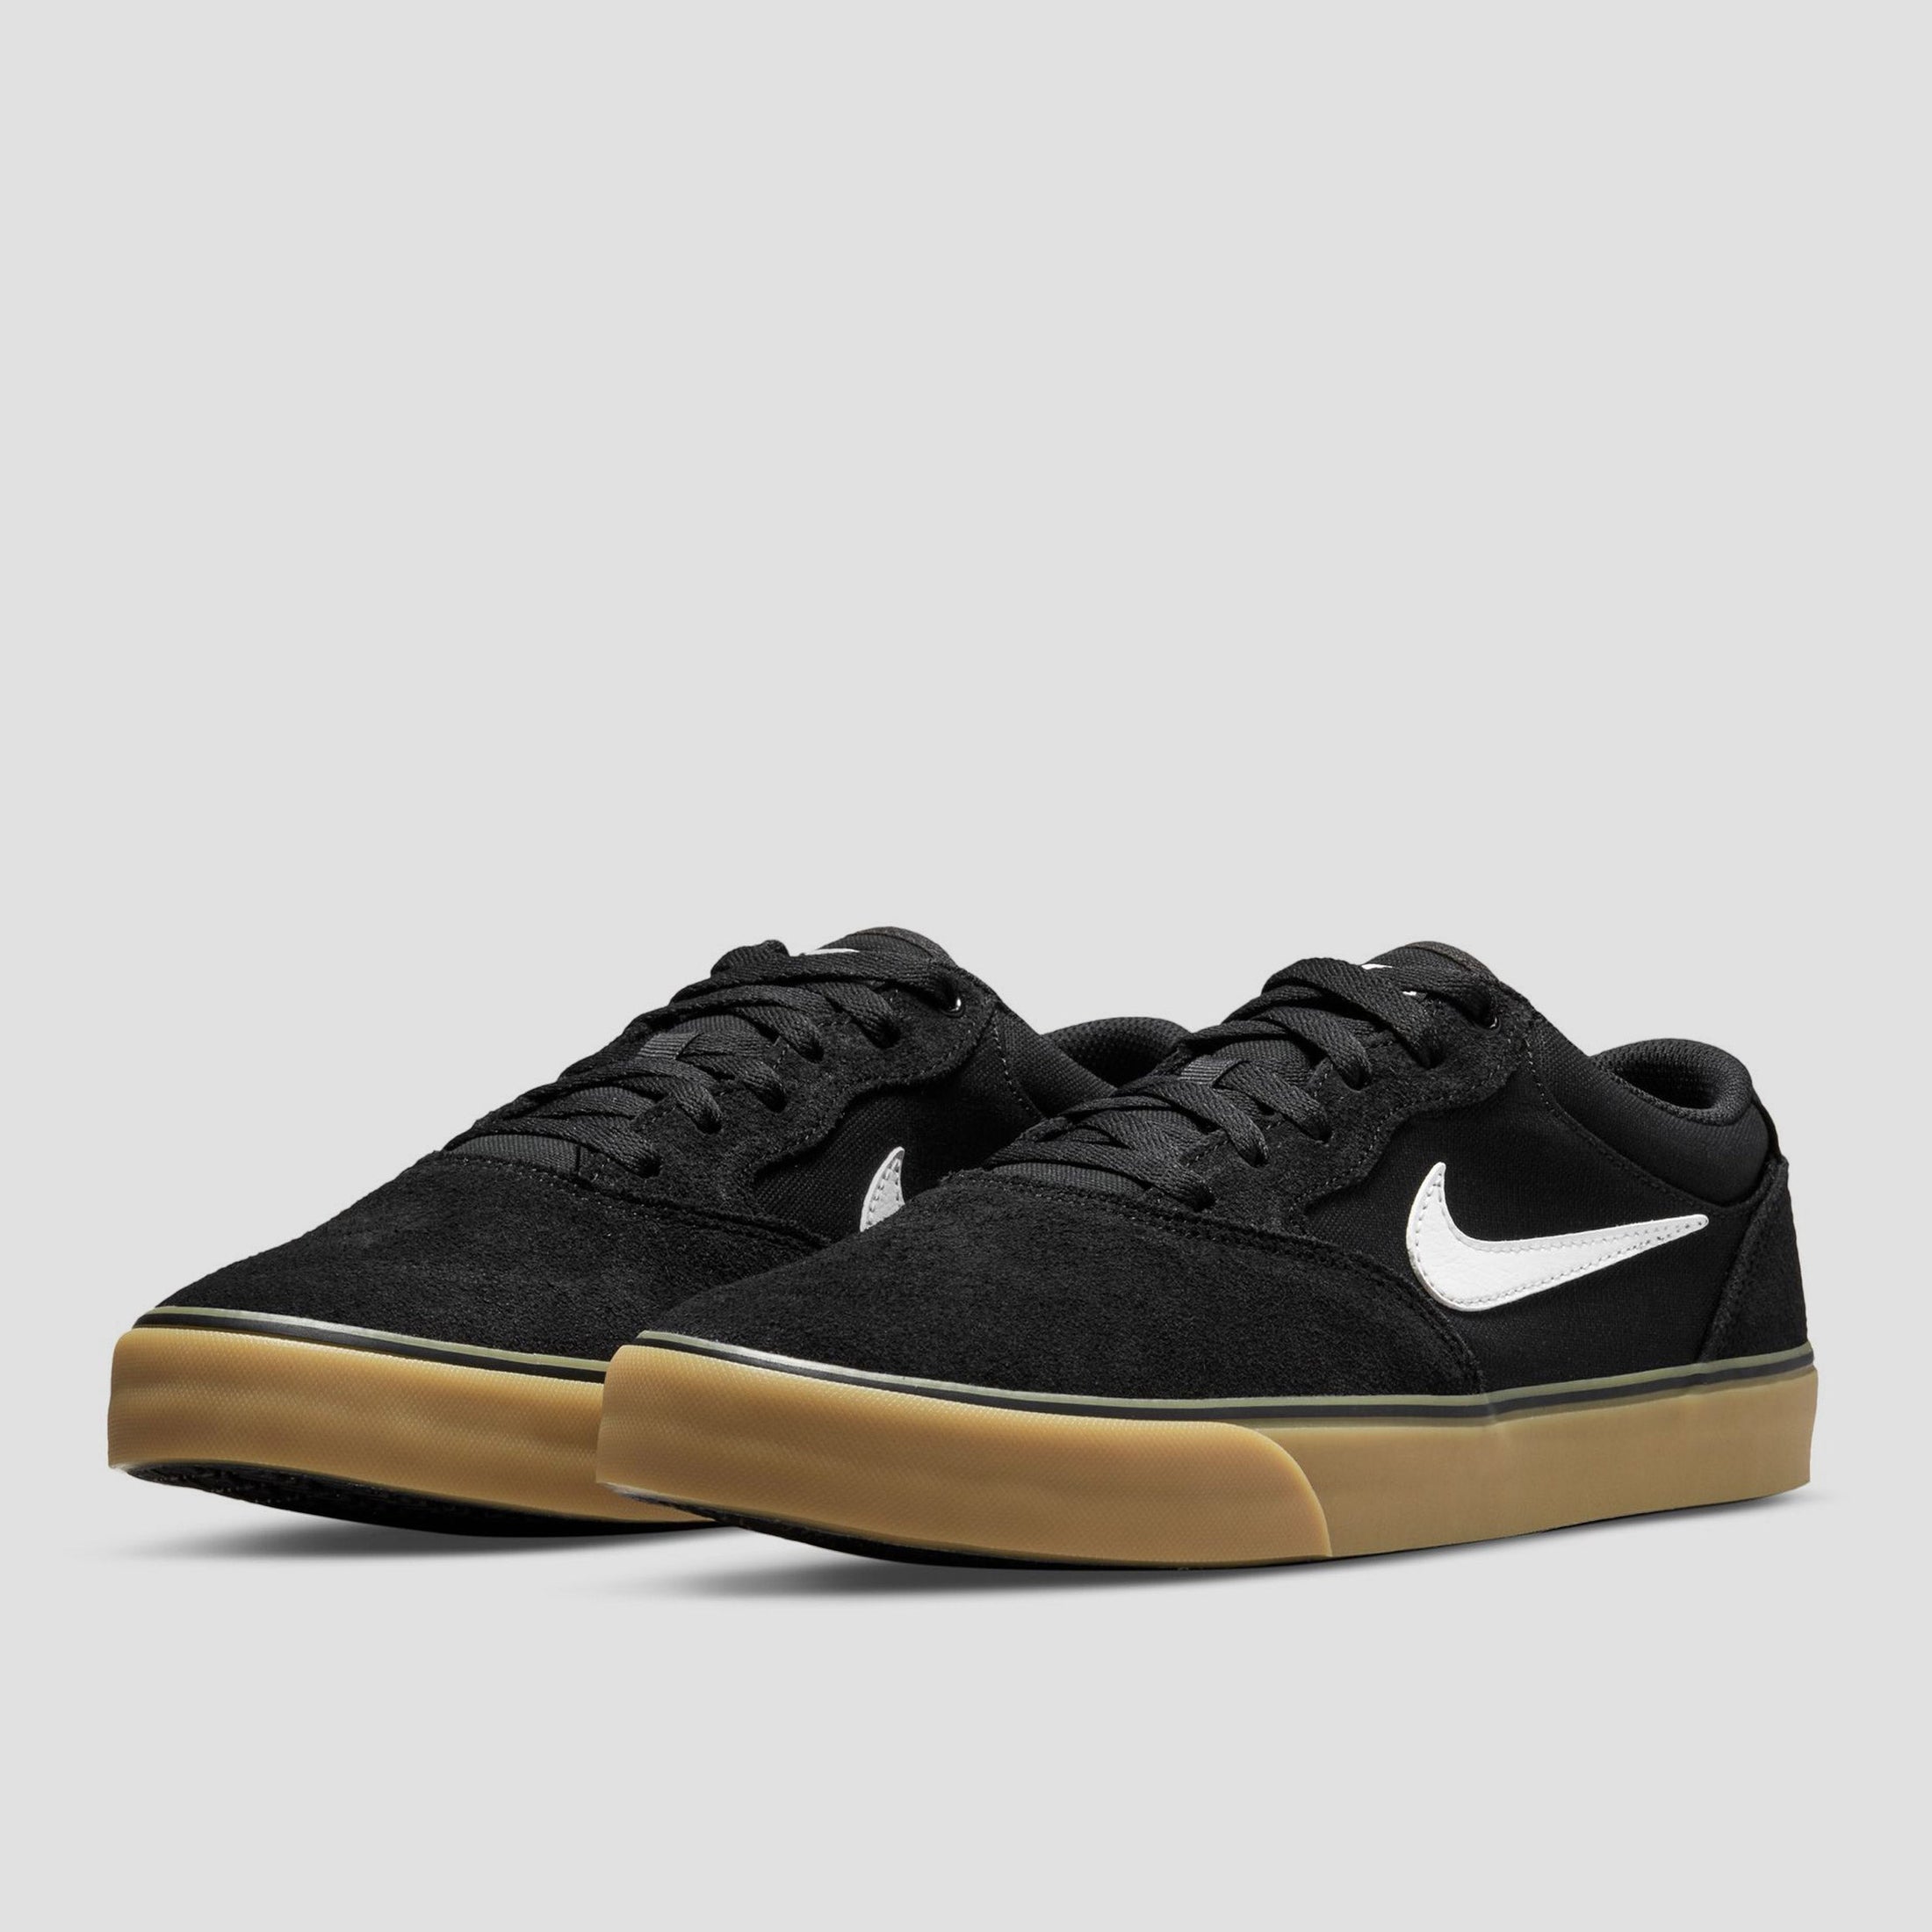 Nike SB Chron 2 Skate Shoes Black / White - Black / Gum